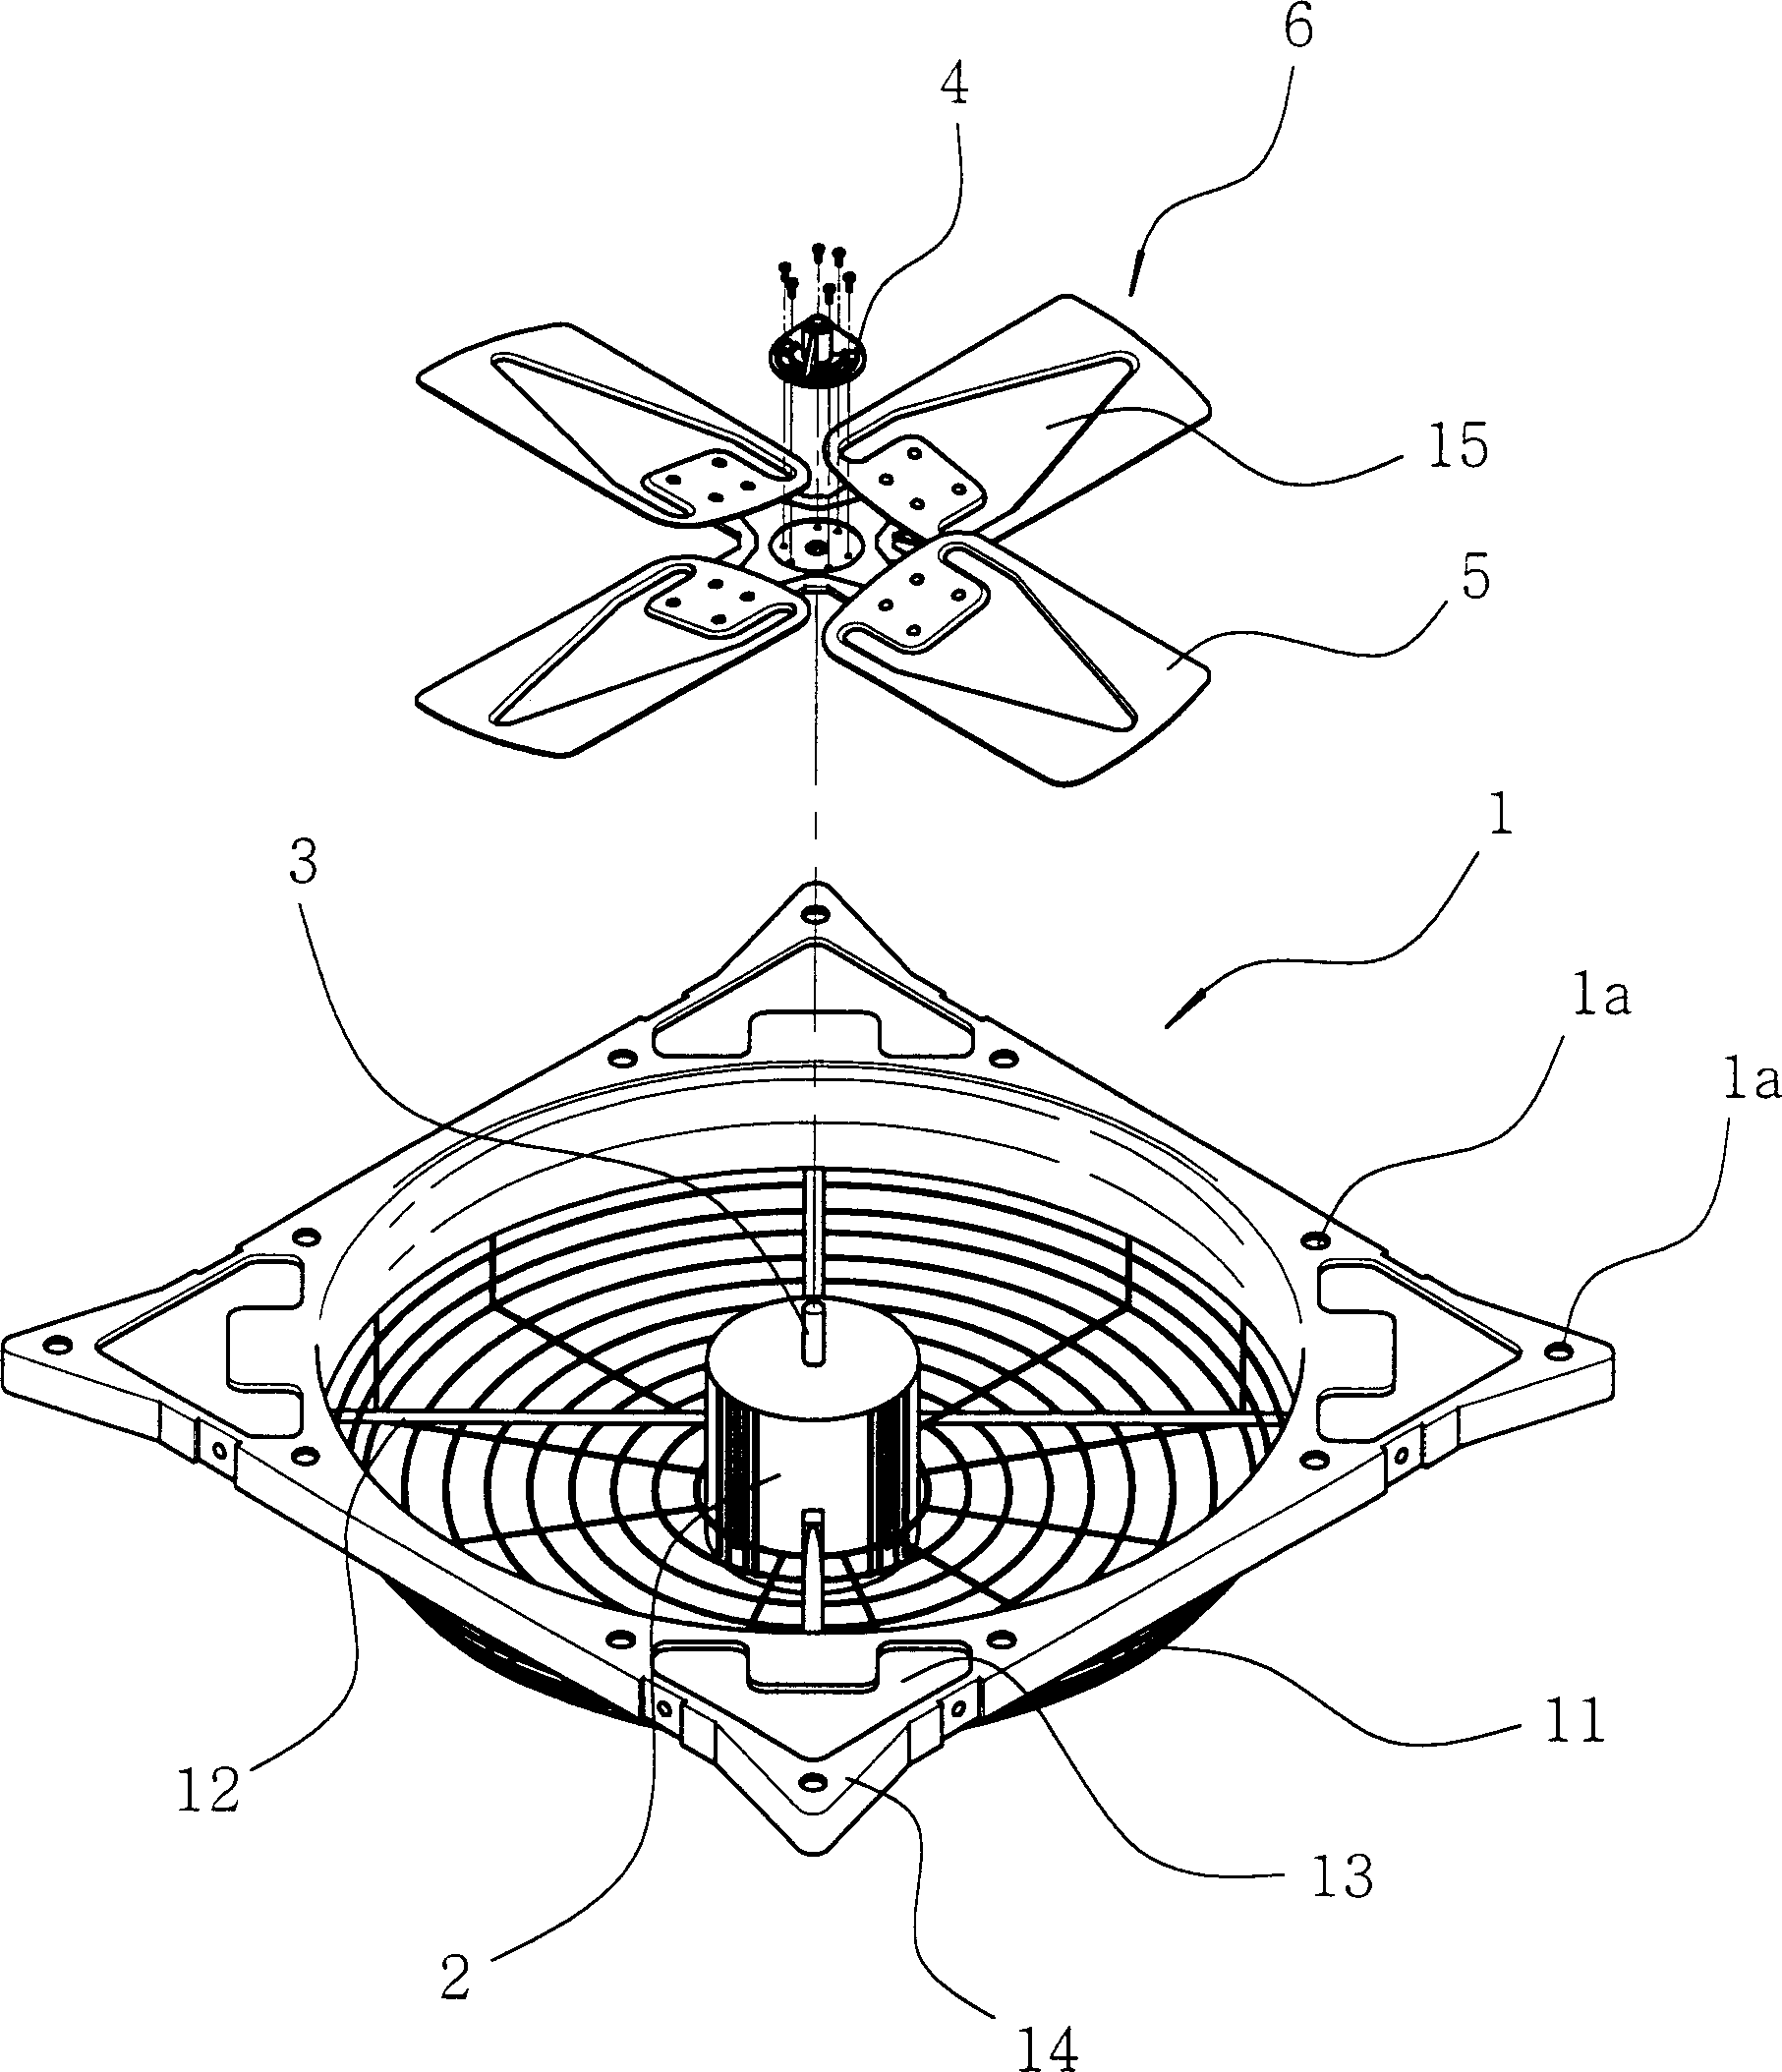 Exhaust fan structure of livestock pen